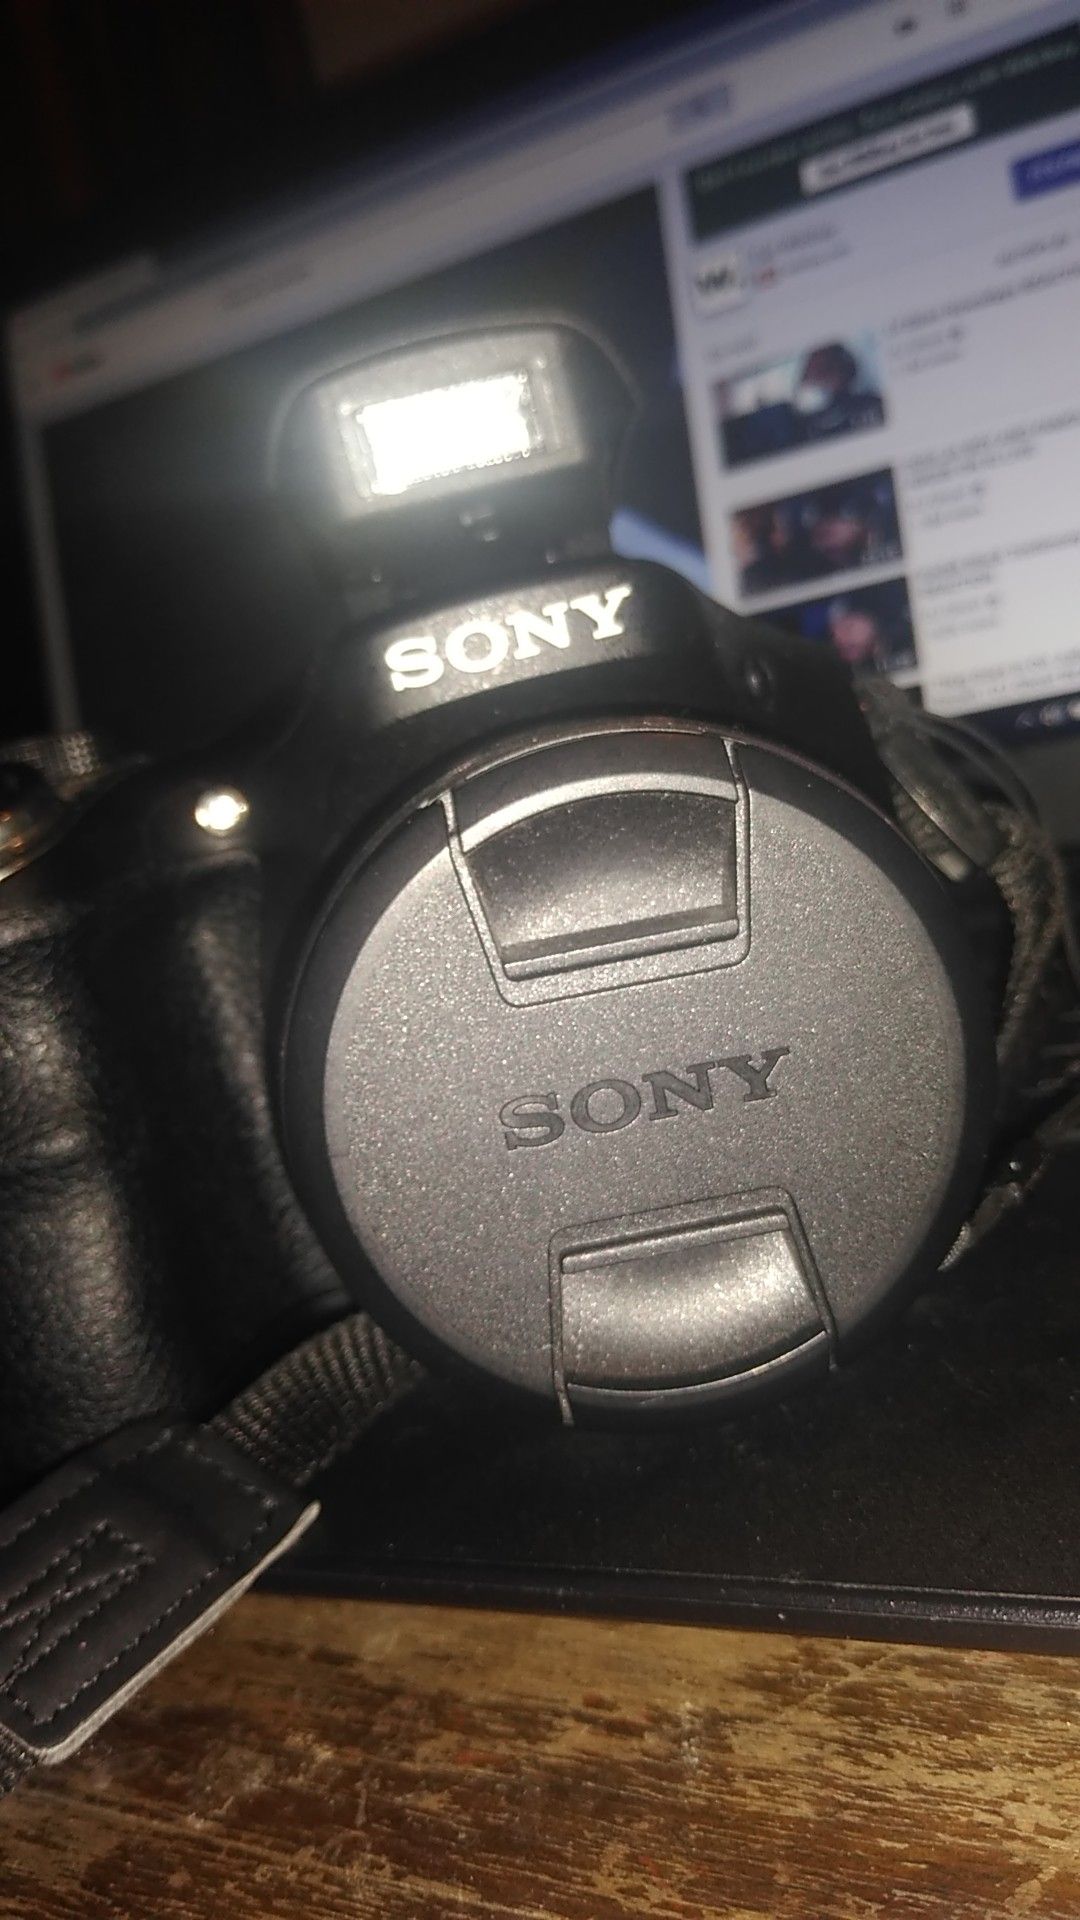 Sony DSLR camera